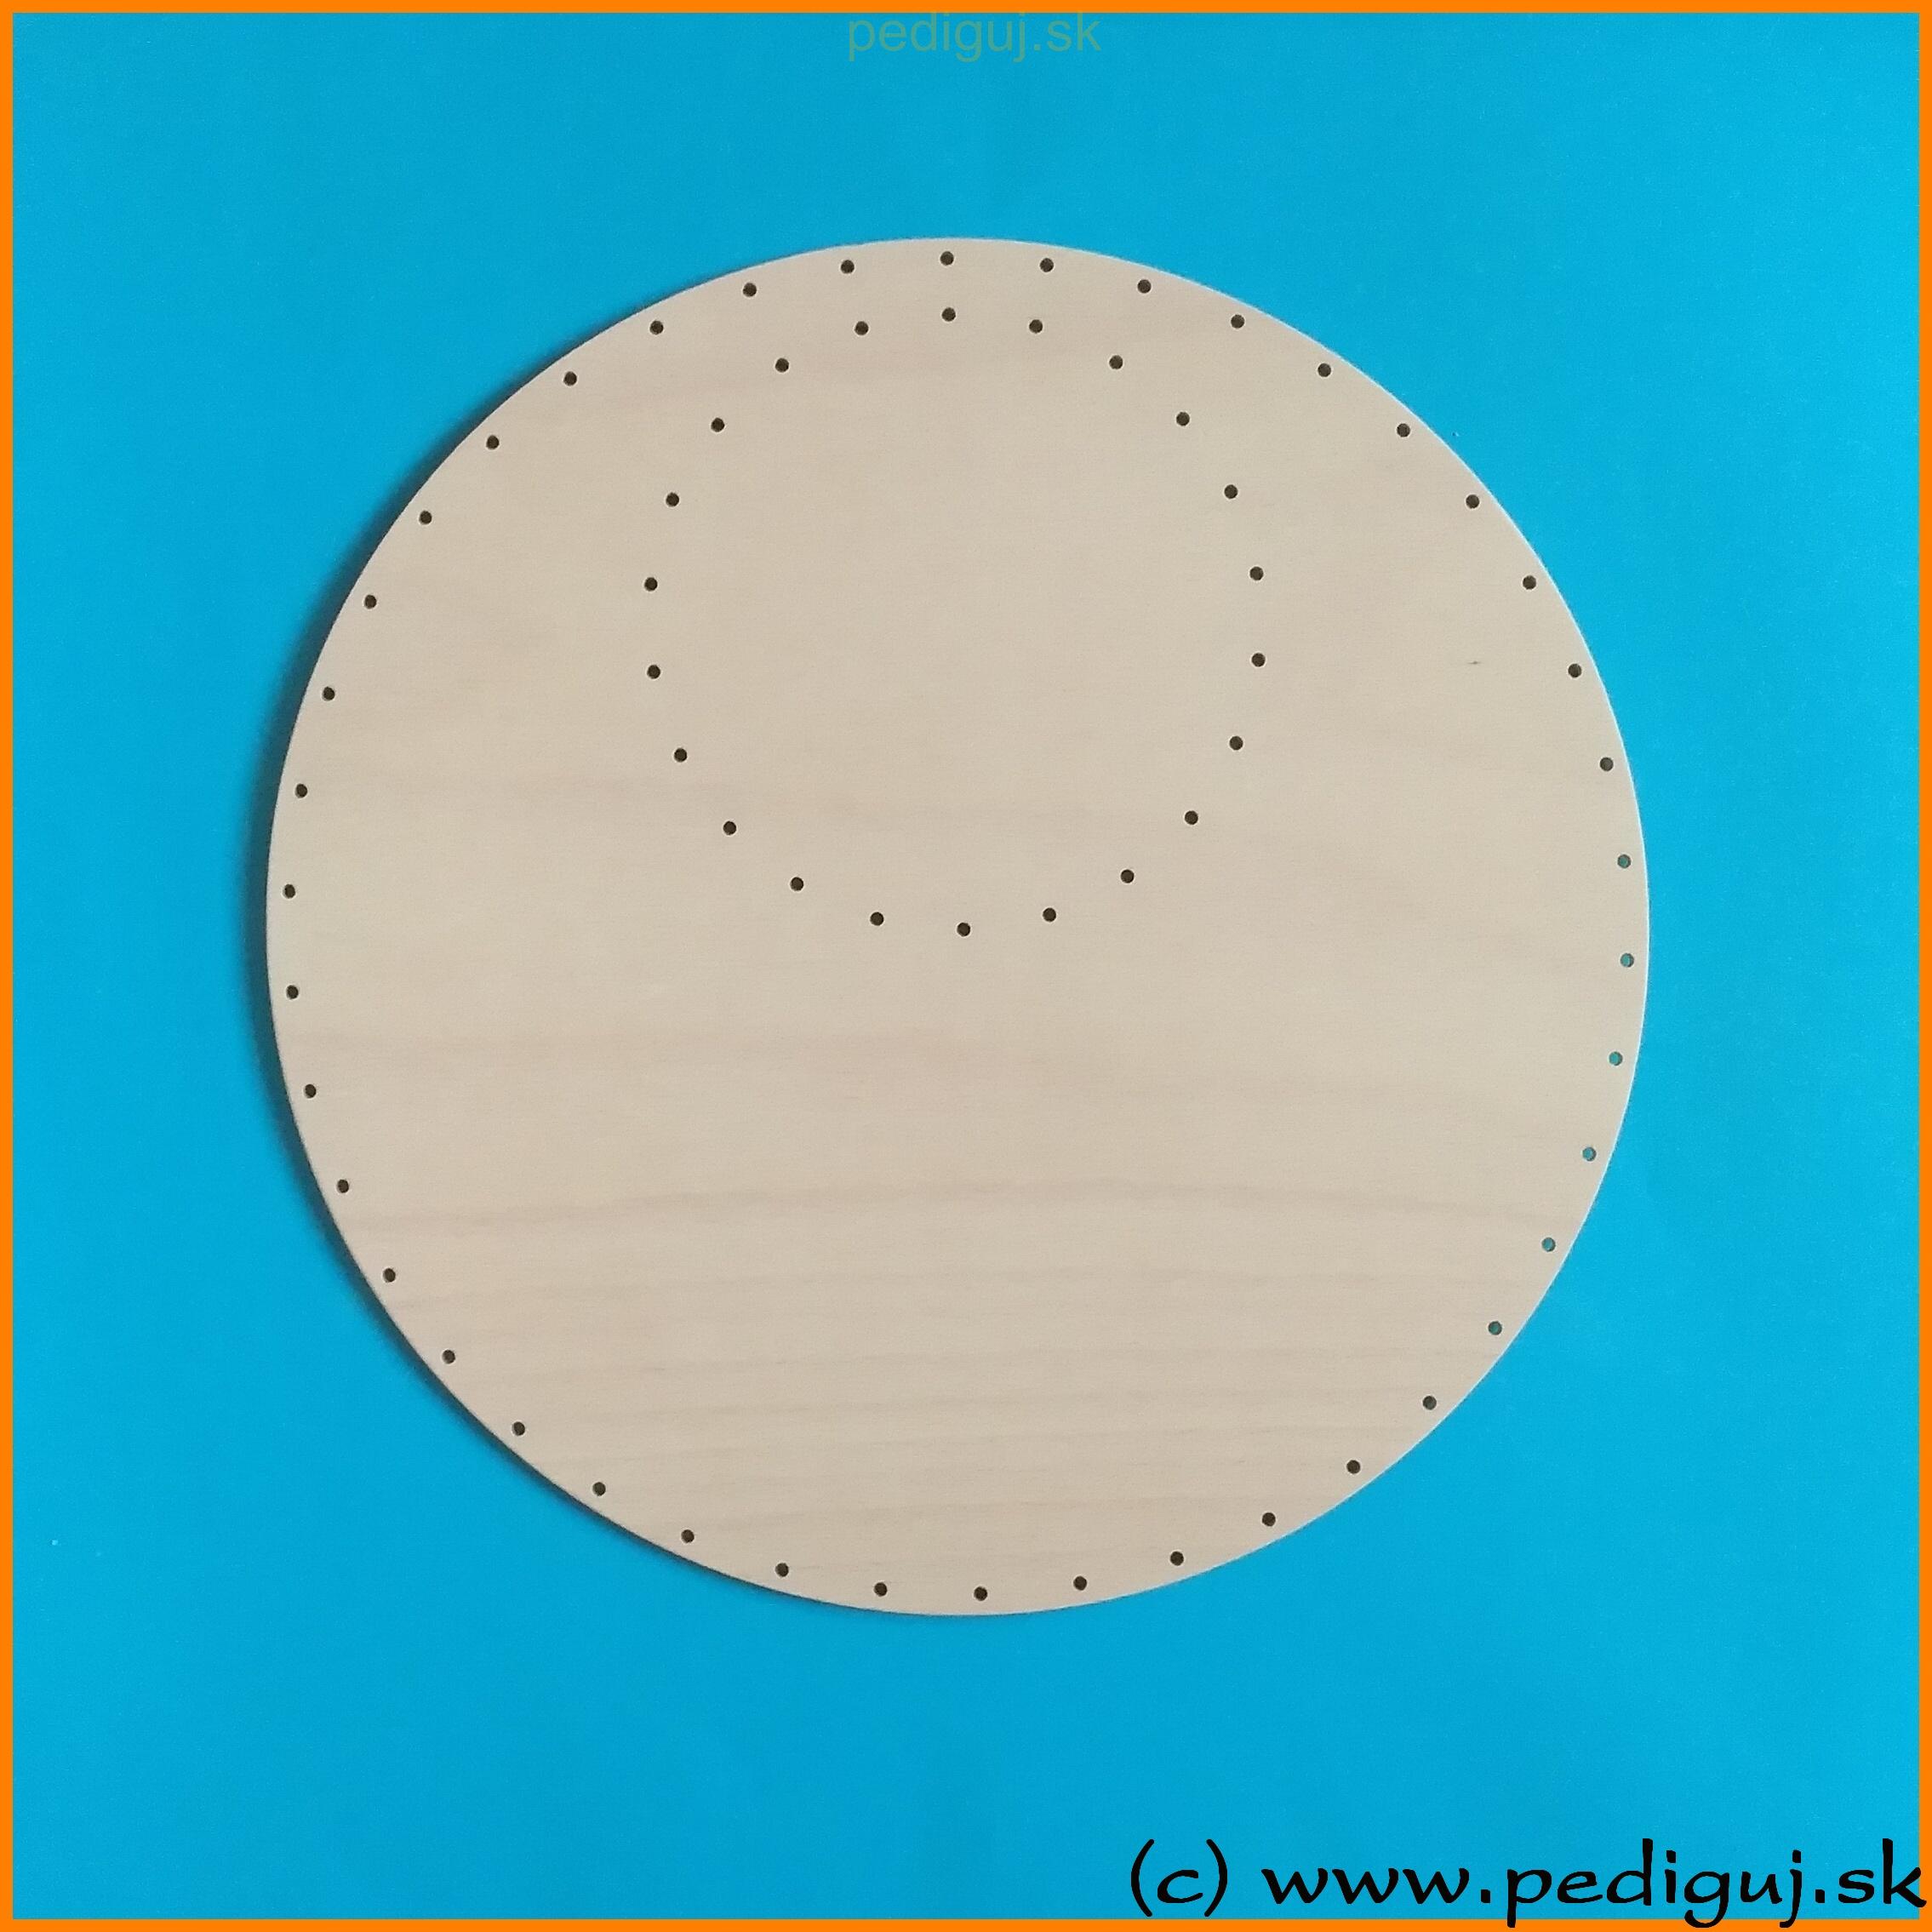 Kruh 31,5 cm-42 s medzikruhom 1 - 14 cm-22 